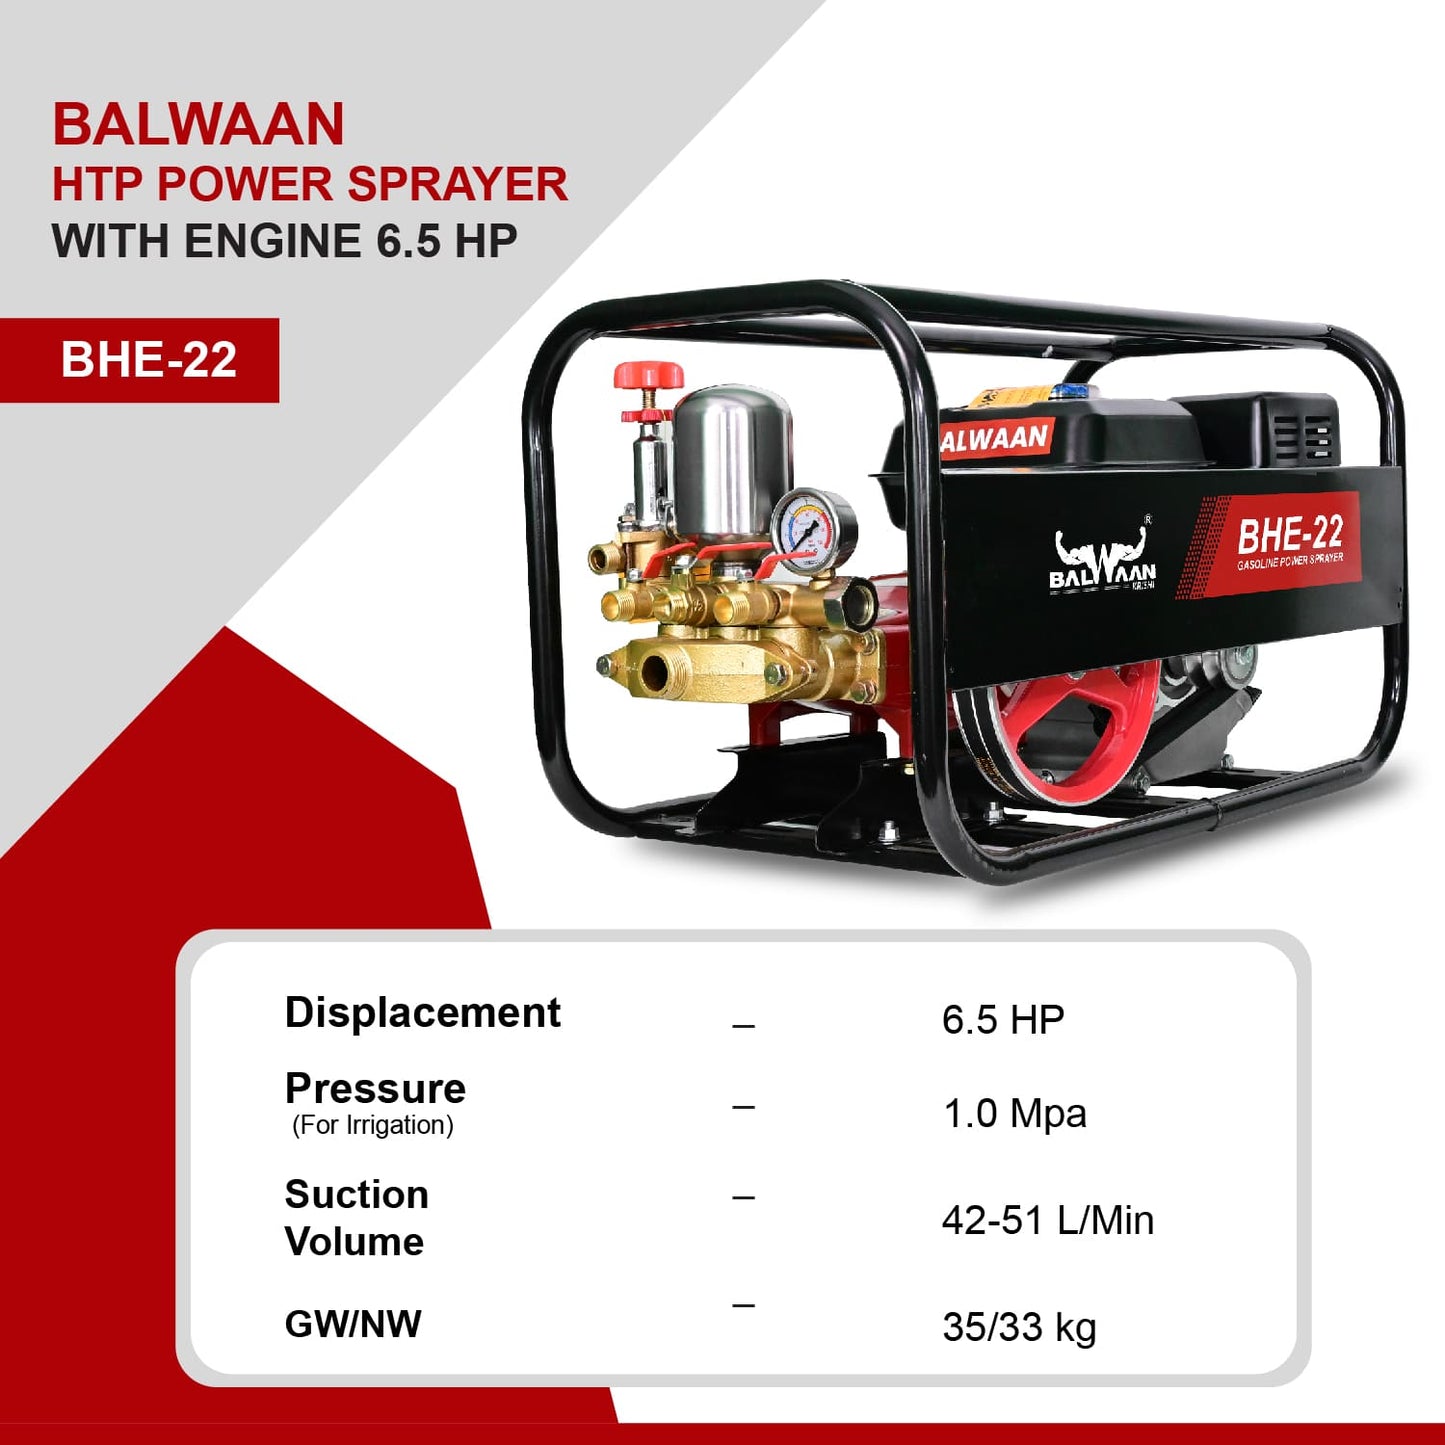 Balwaan BHE-22 HTP with Engine 6.5HP